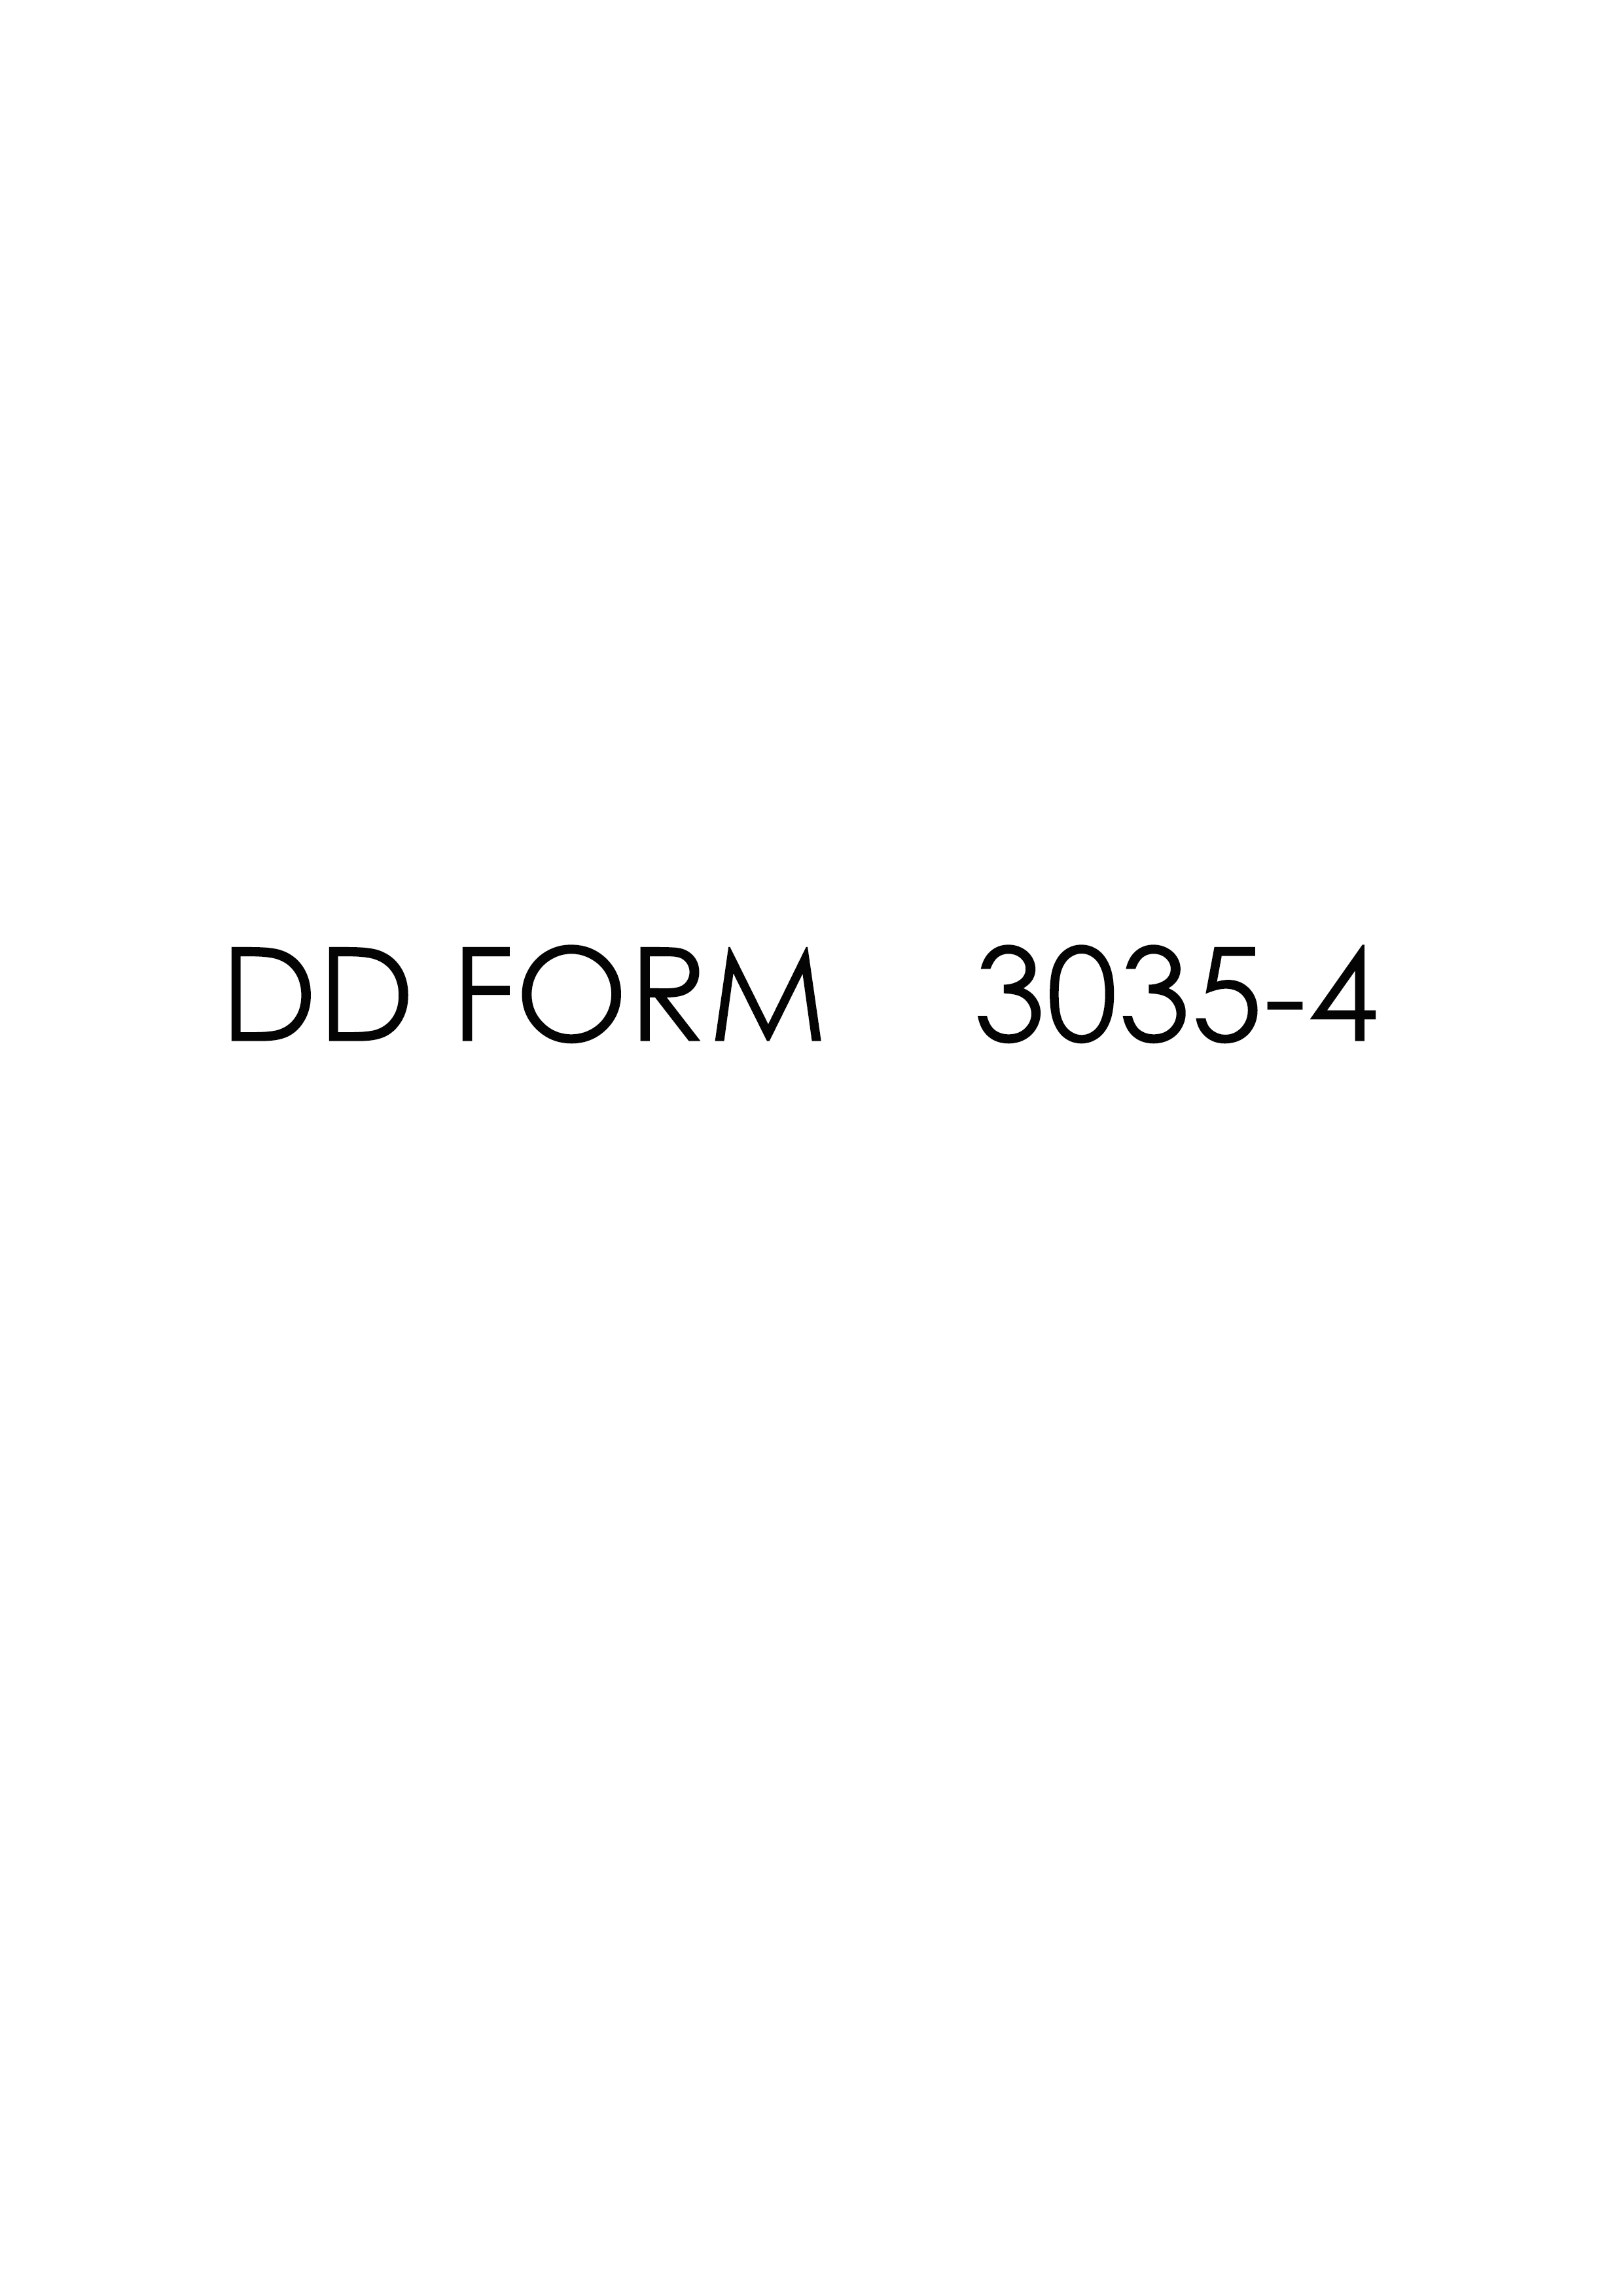 Download dd 3035-4 Form